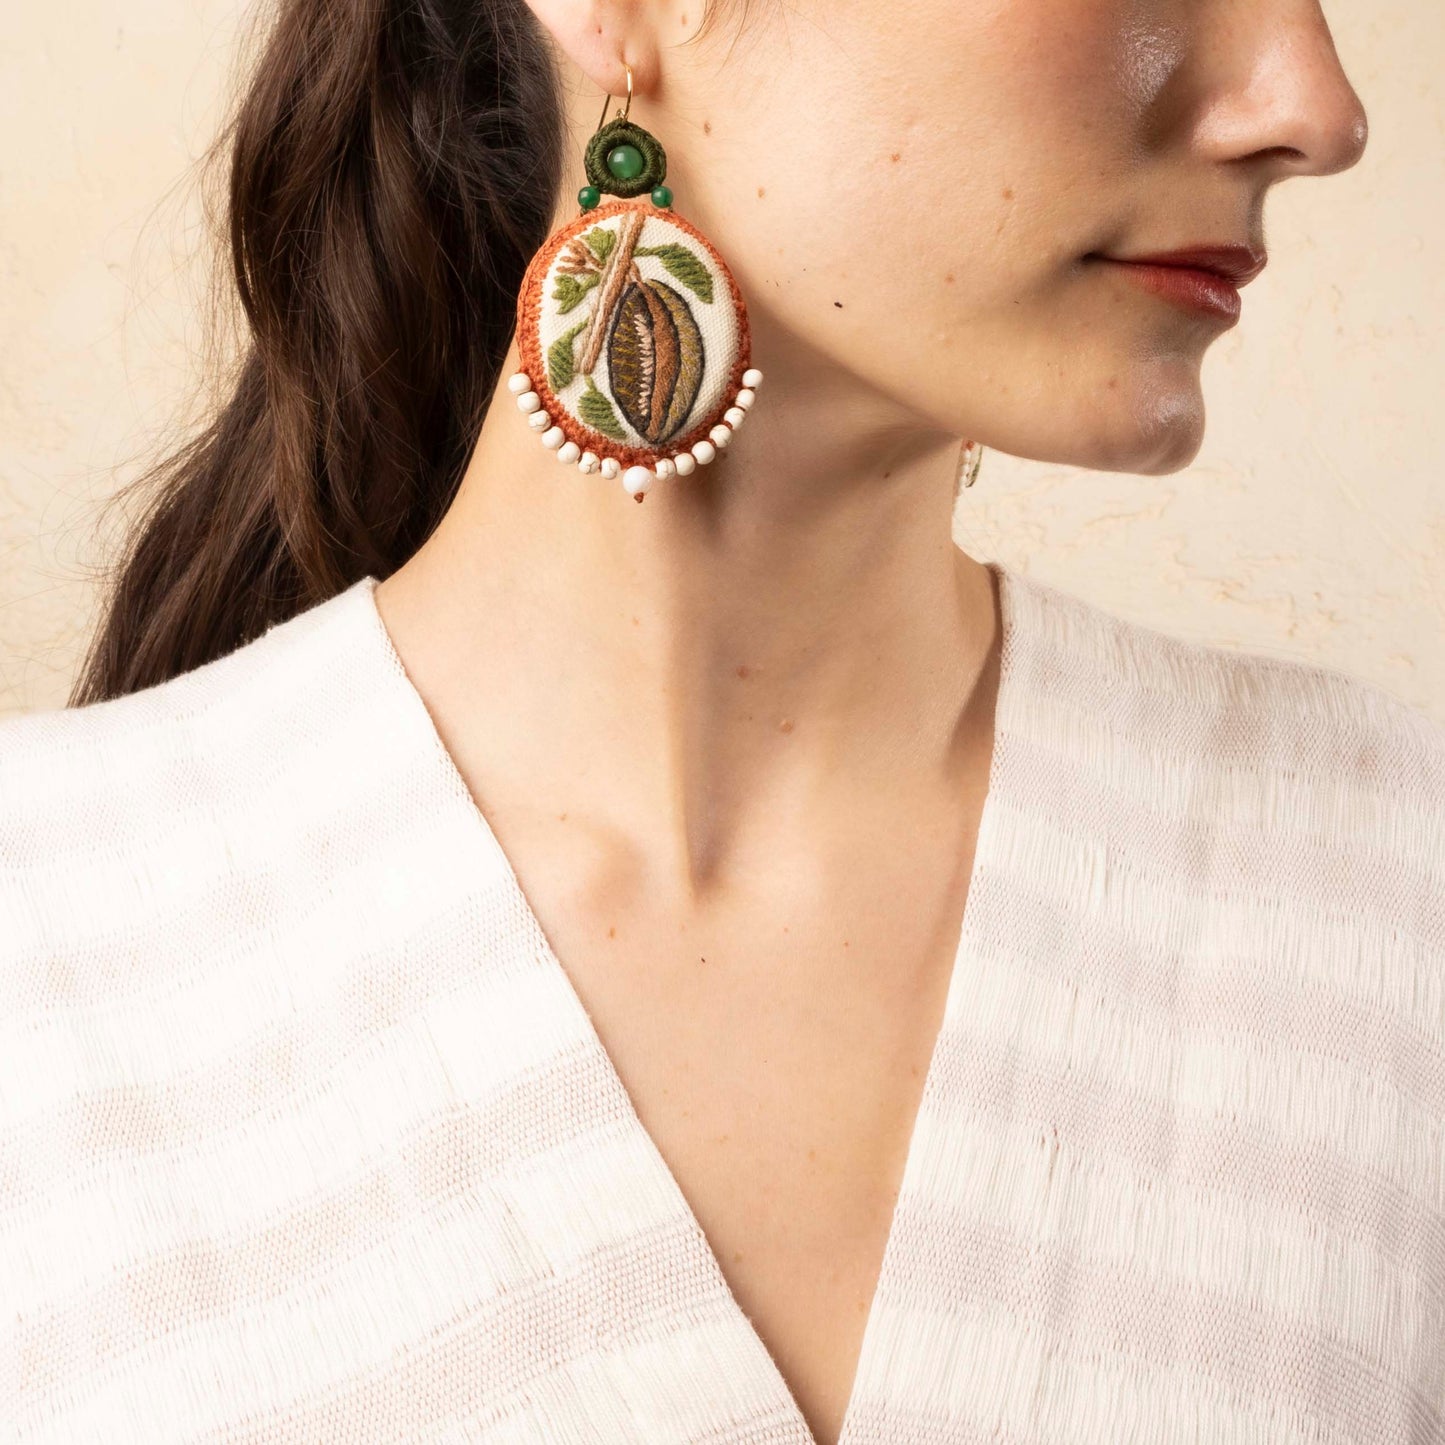 "Terracotta cocoa" earrings